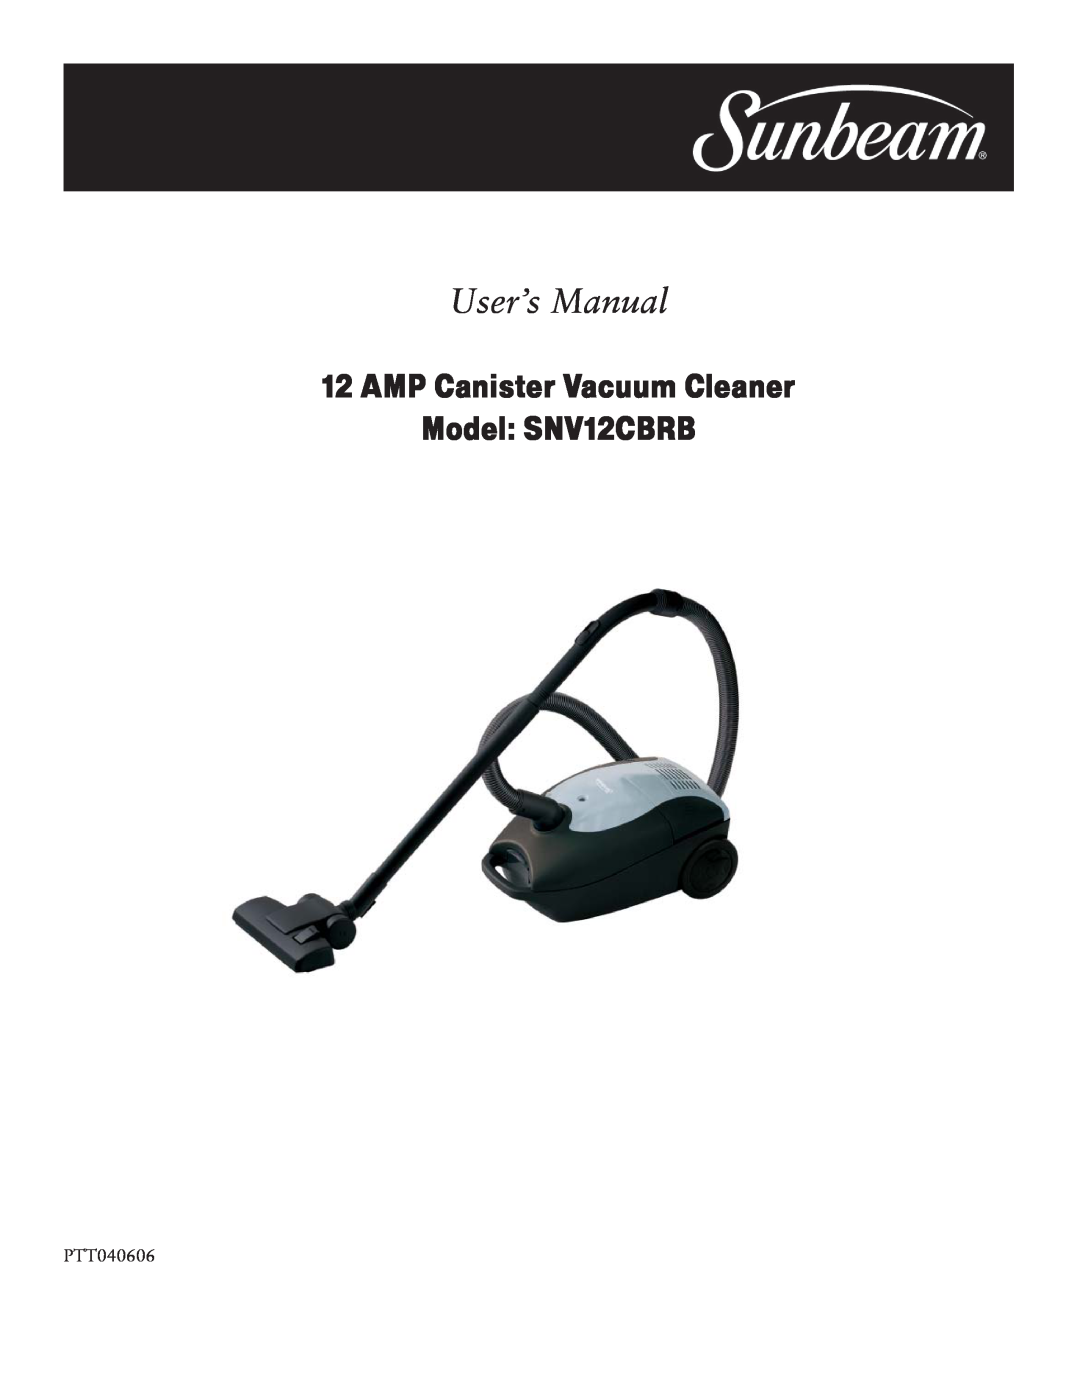 Sunbeam user manual AMP Canister Vacuum Cleaner Model SNV12CBRB, PTT040606 